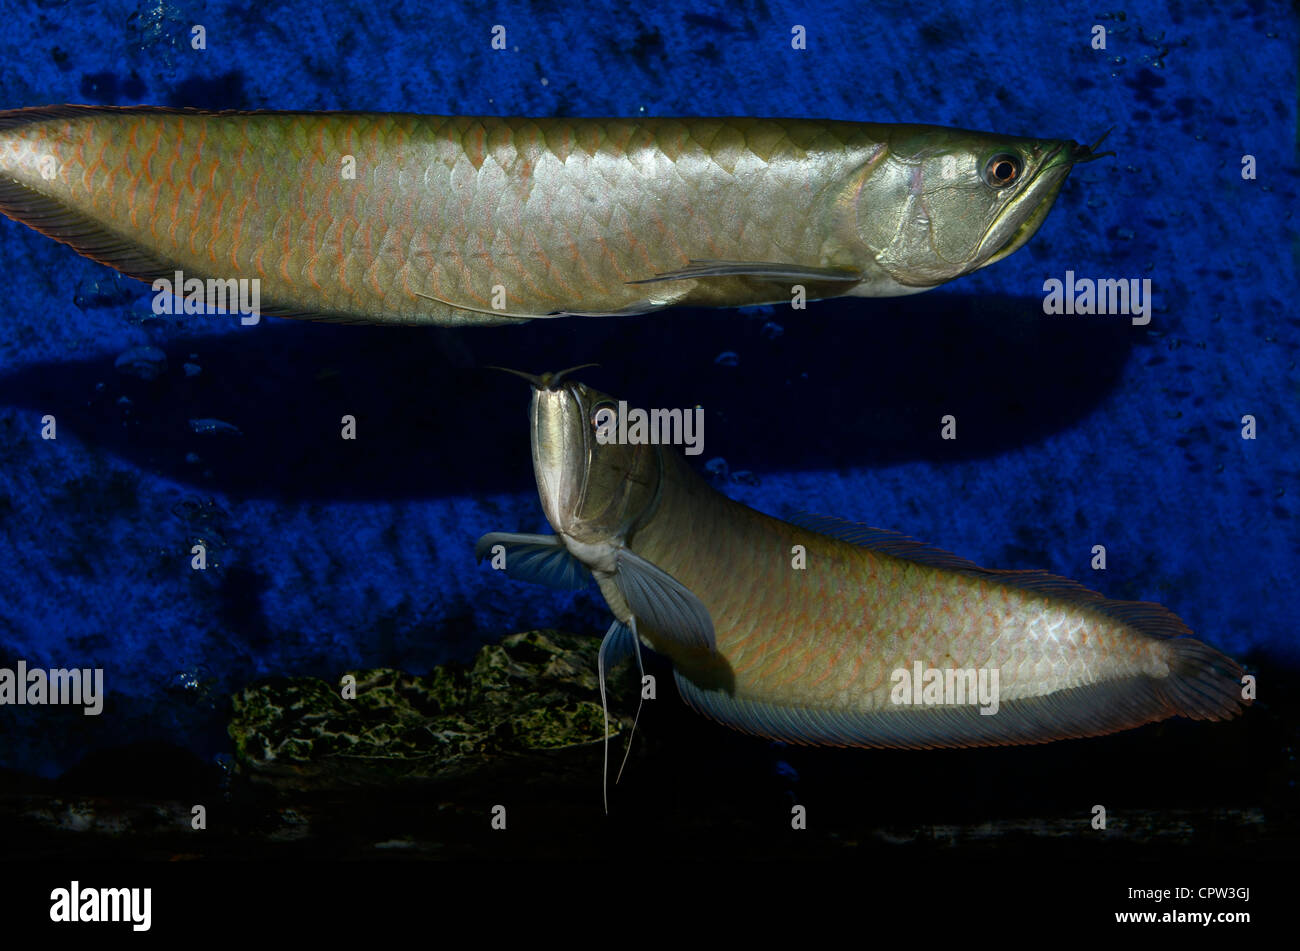 Two Silver Arowana freshwater bonytongue fish from the Amazon river swimming in an aquarium Stock Photo